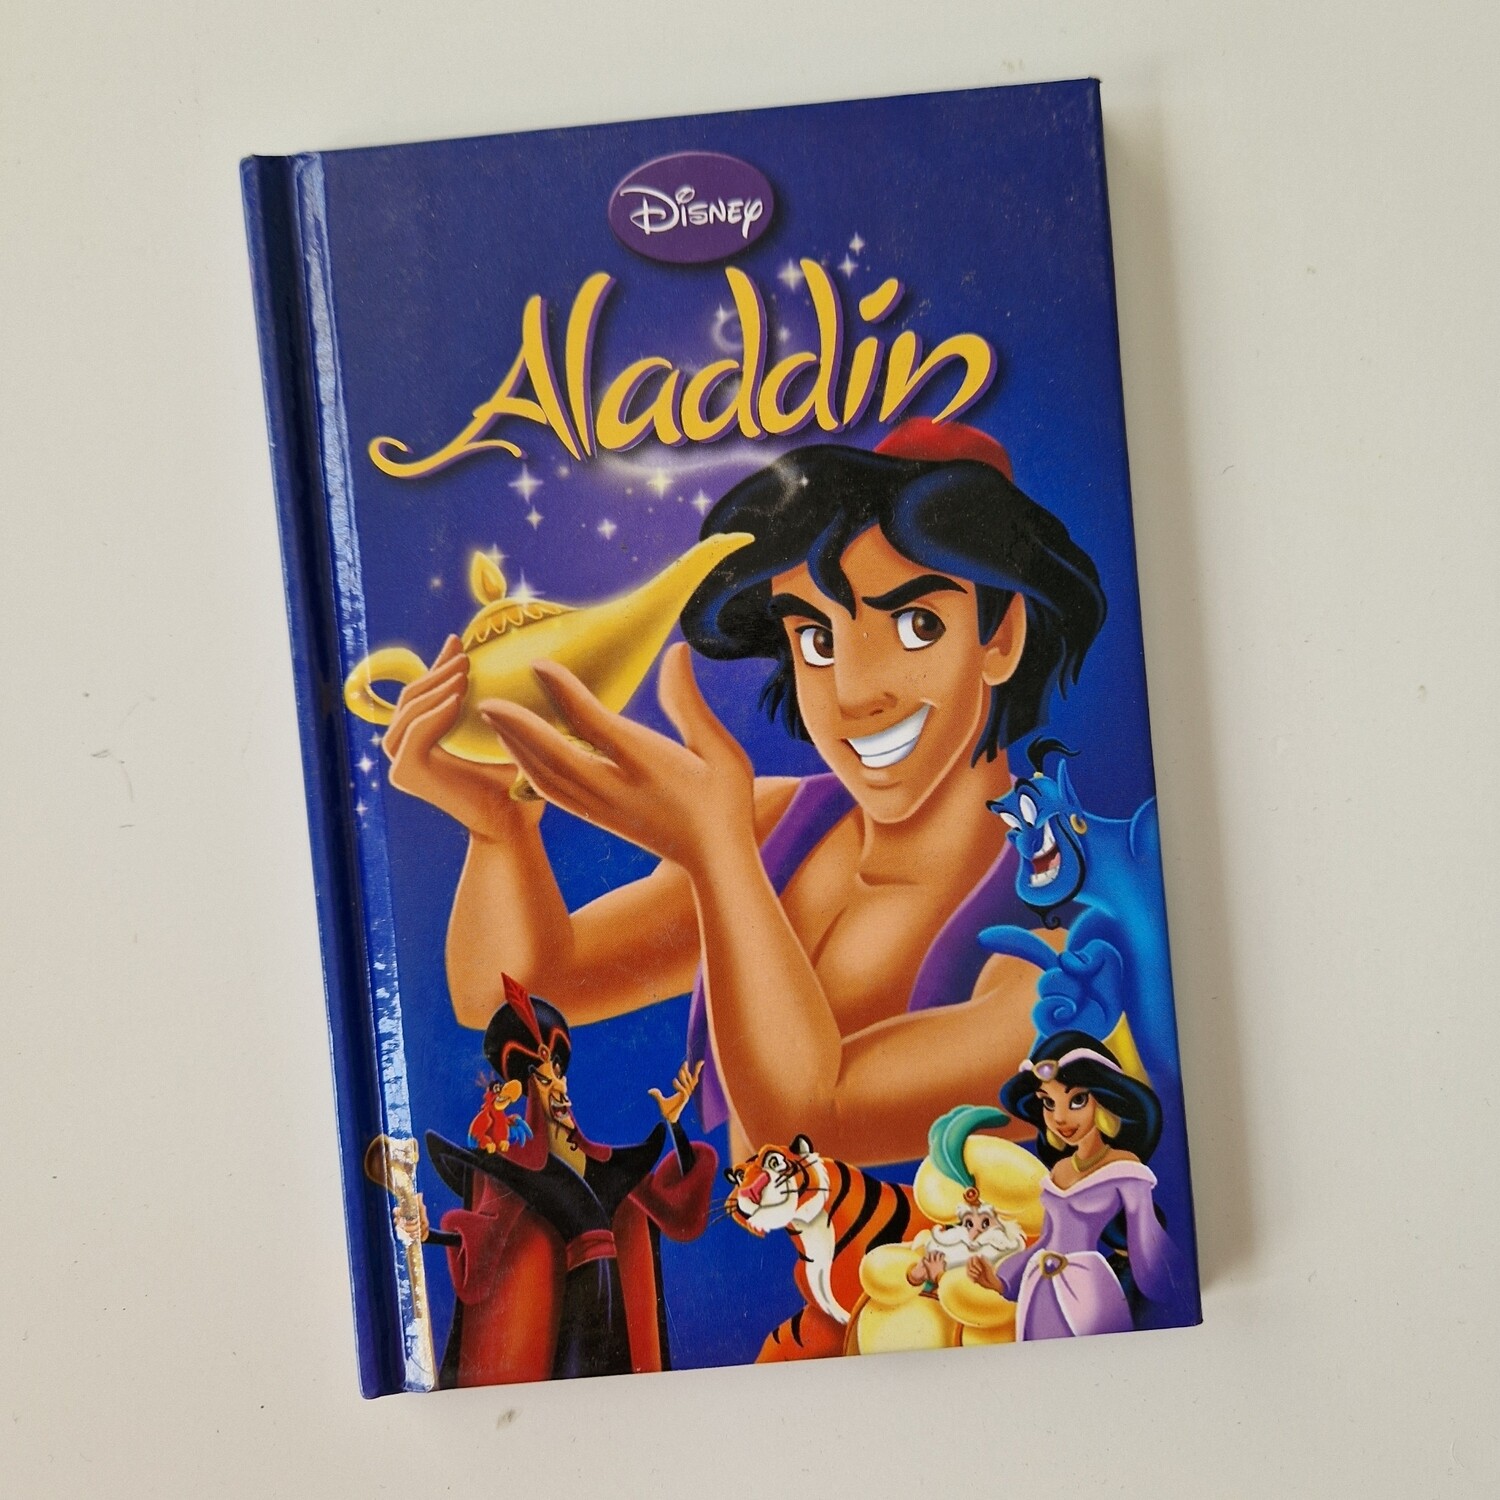 Aladdin Ladybird Book